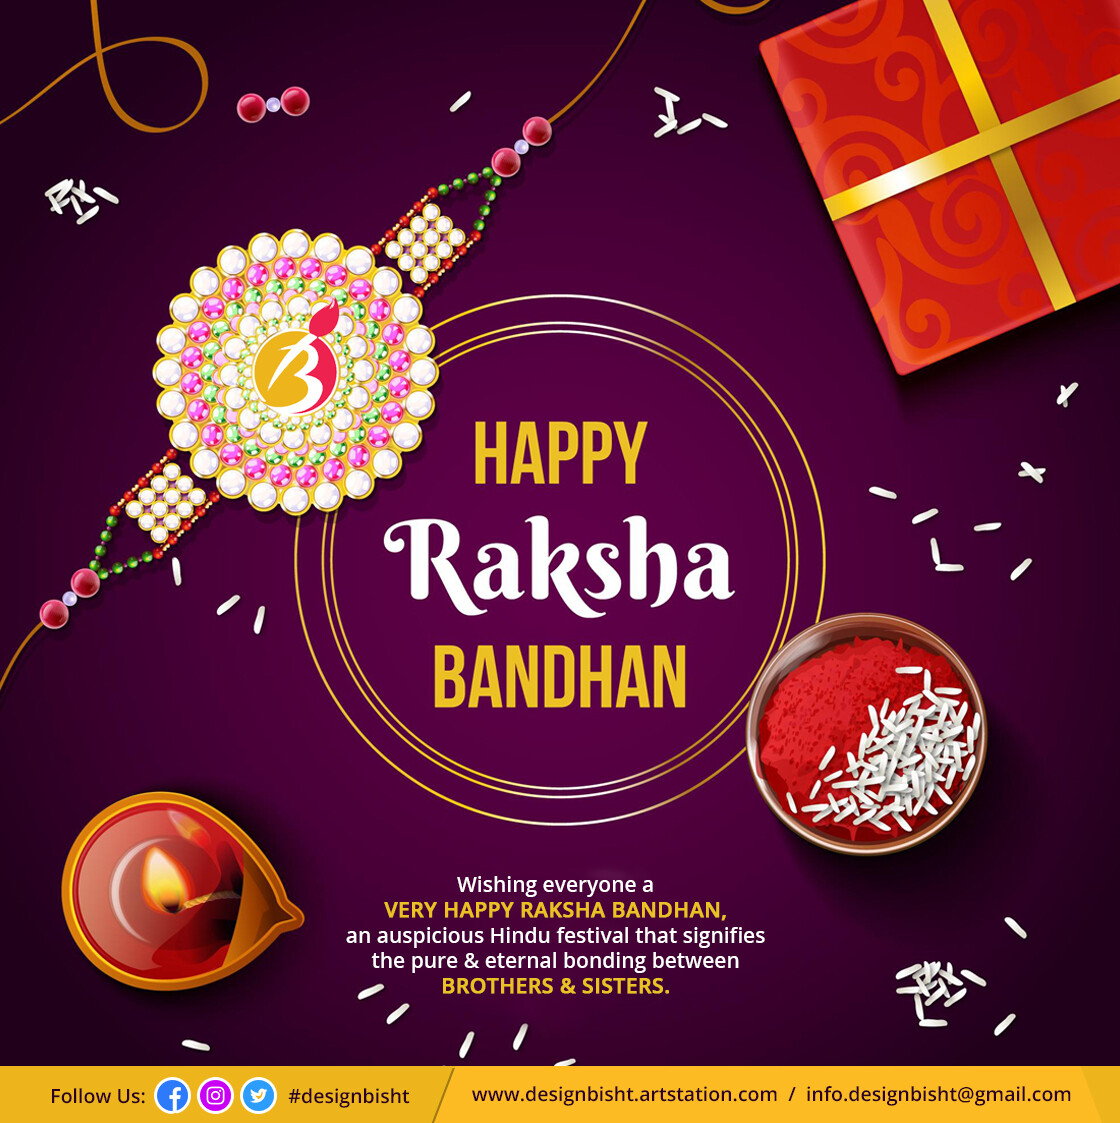 Design Bisht - Happy Raksha Bandhan